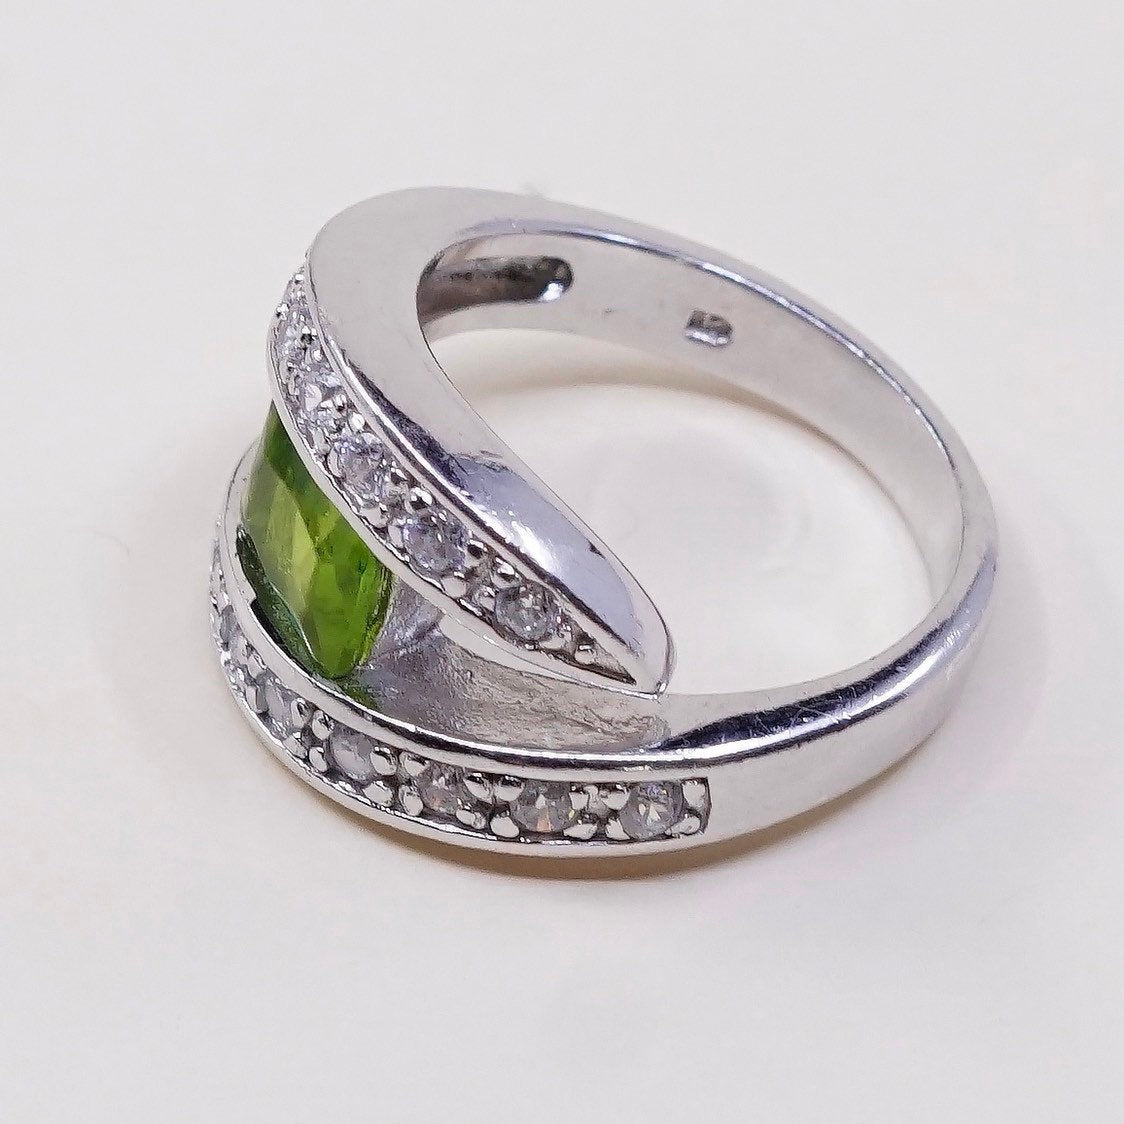 sz 8.25, vtg sterling silver handmade ring, 925 w/ peridot n cz around